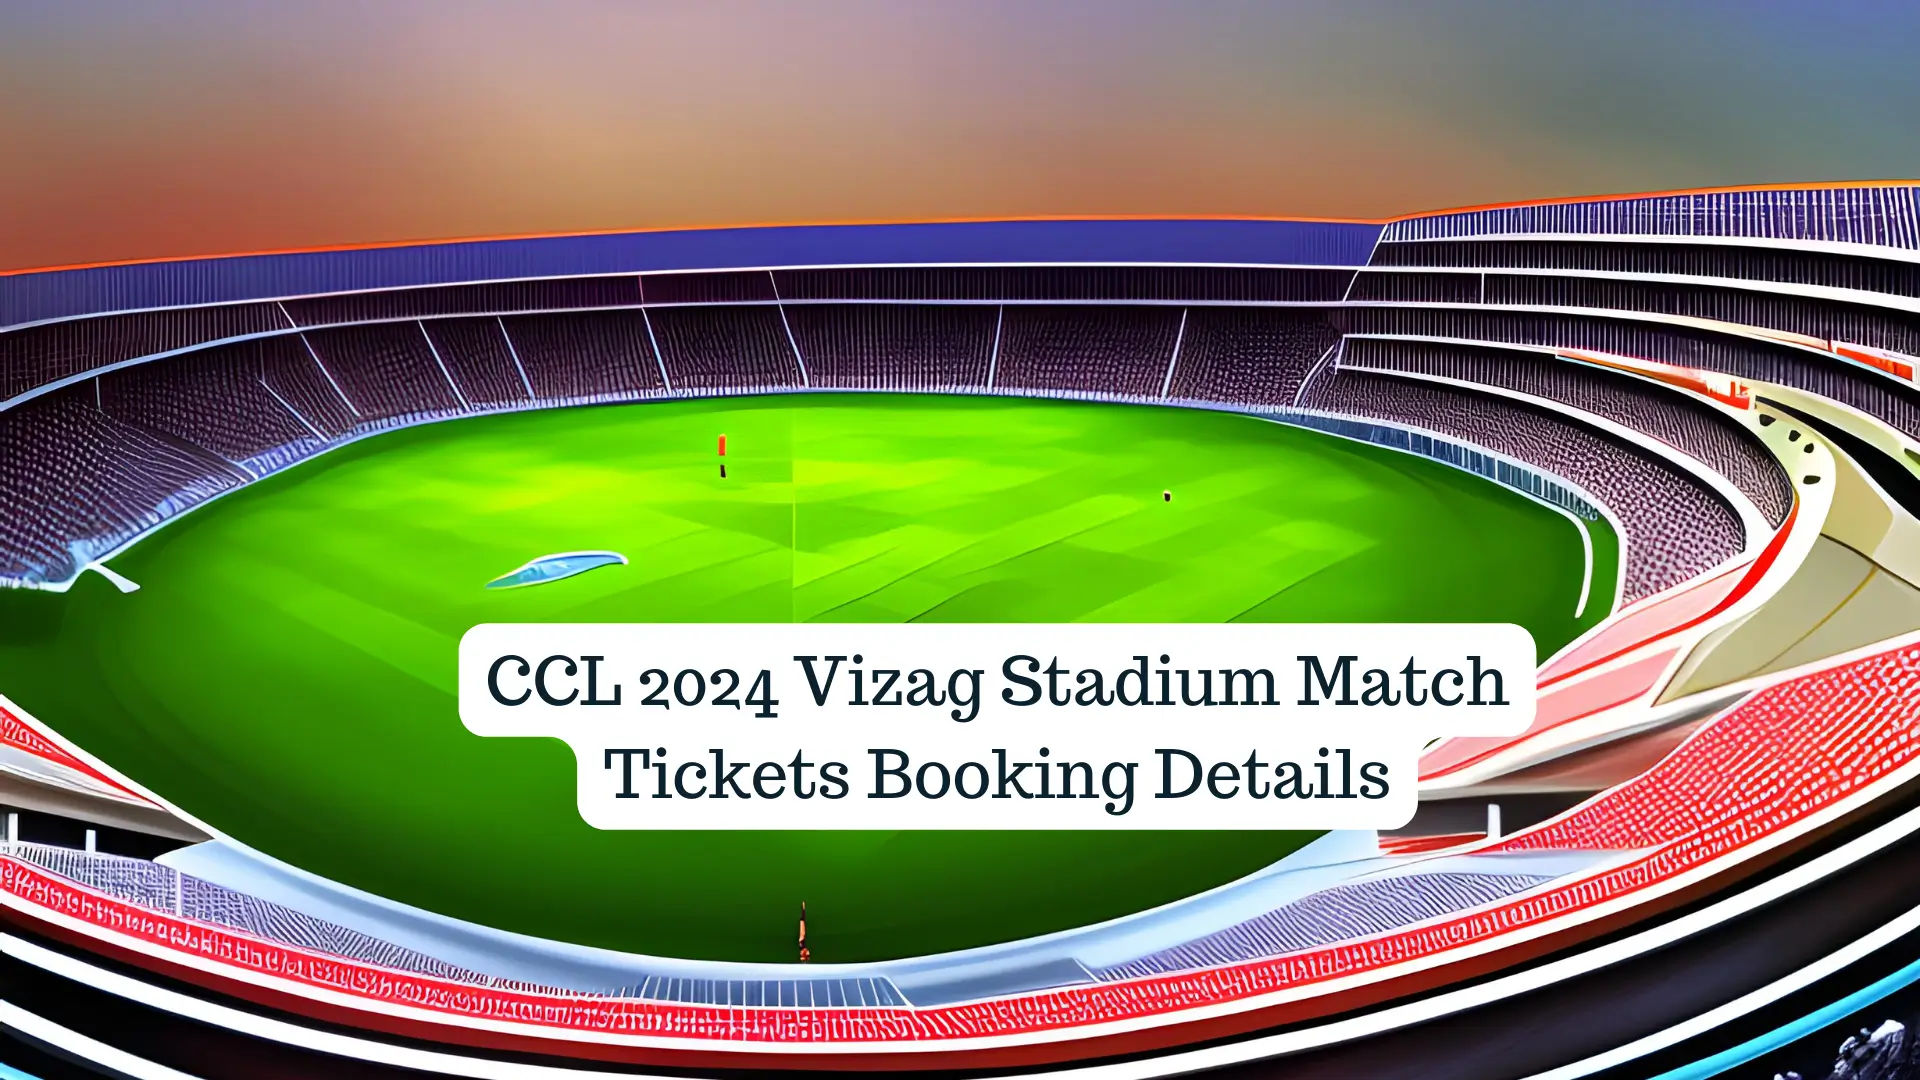 CCL 2024 Vizag Stadium Match Tickets Booking Details